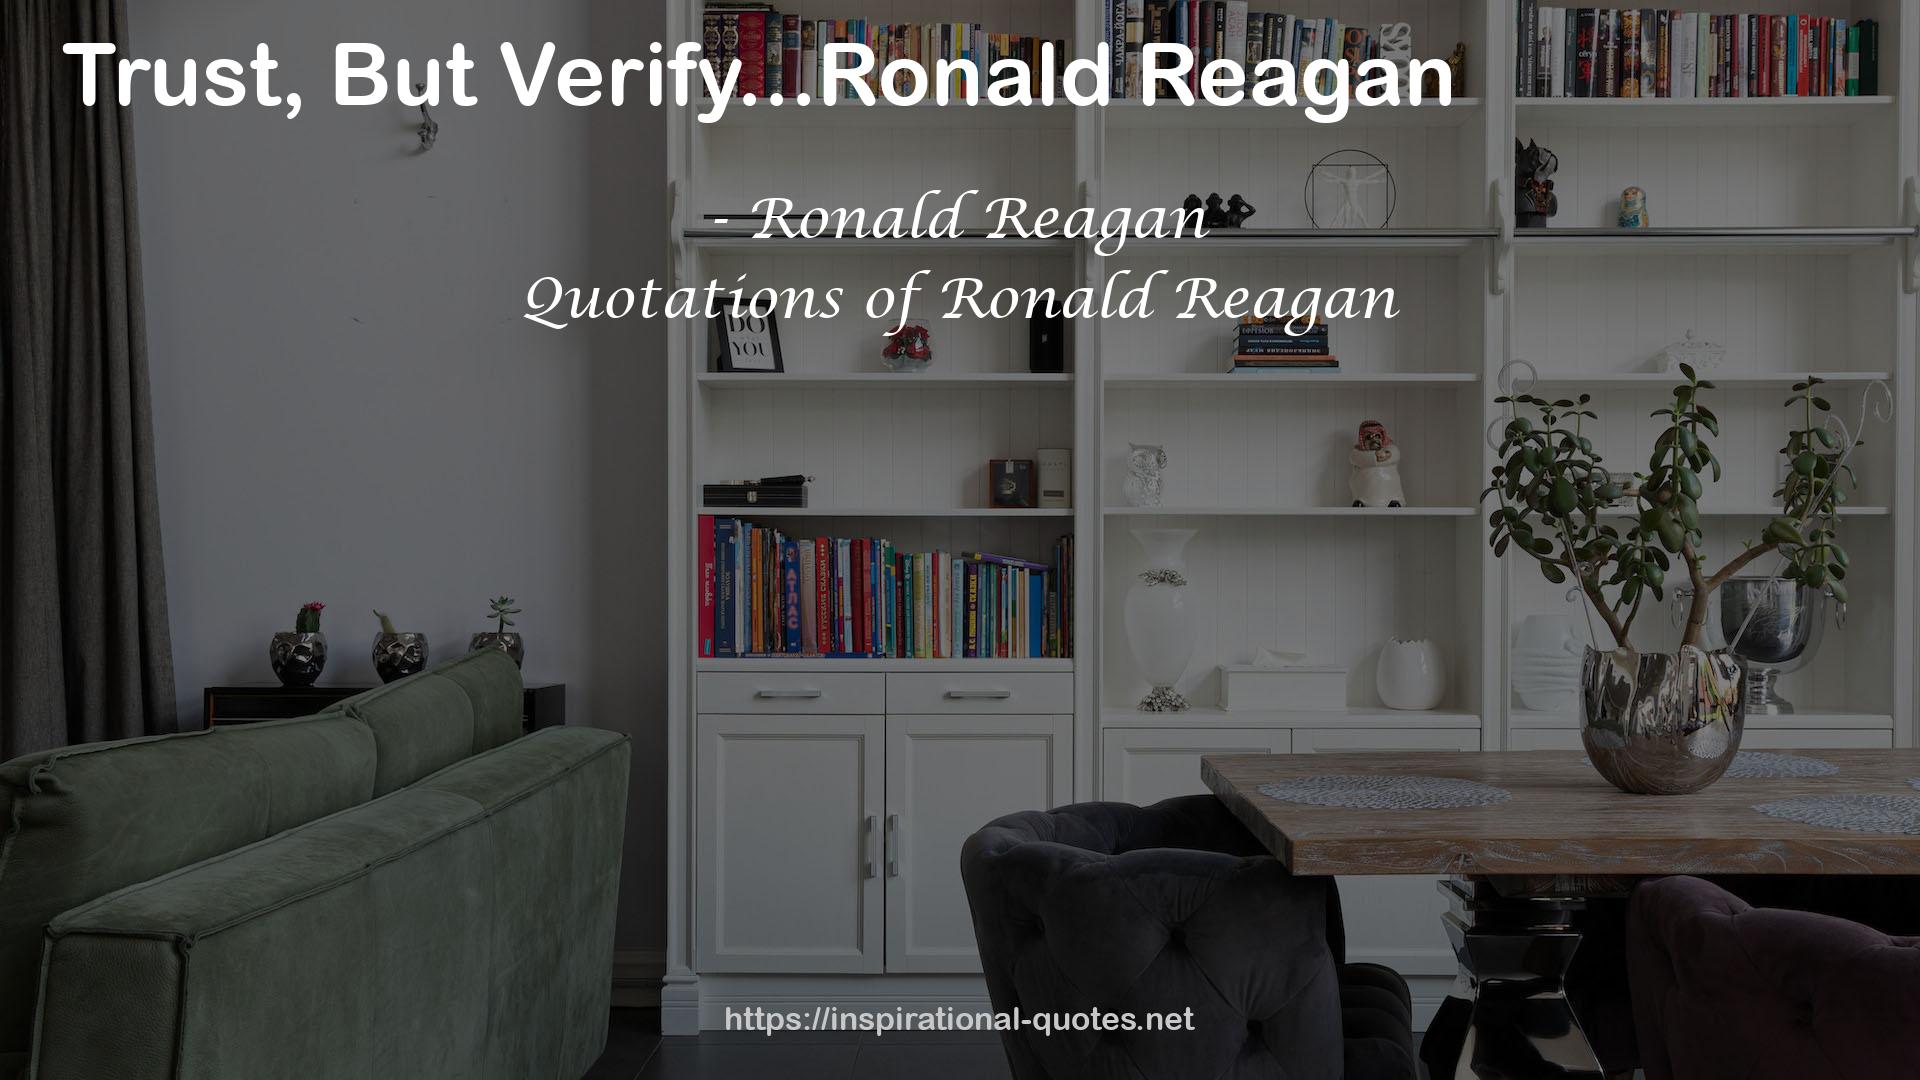 Quotations of Ronald Reagan QUOTES